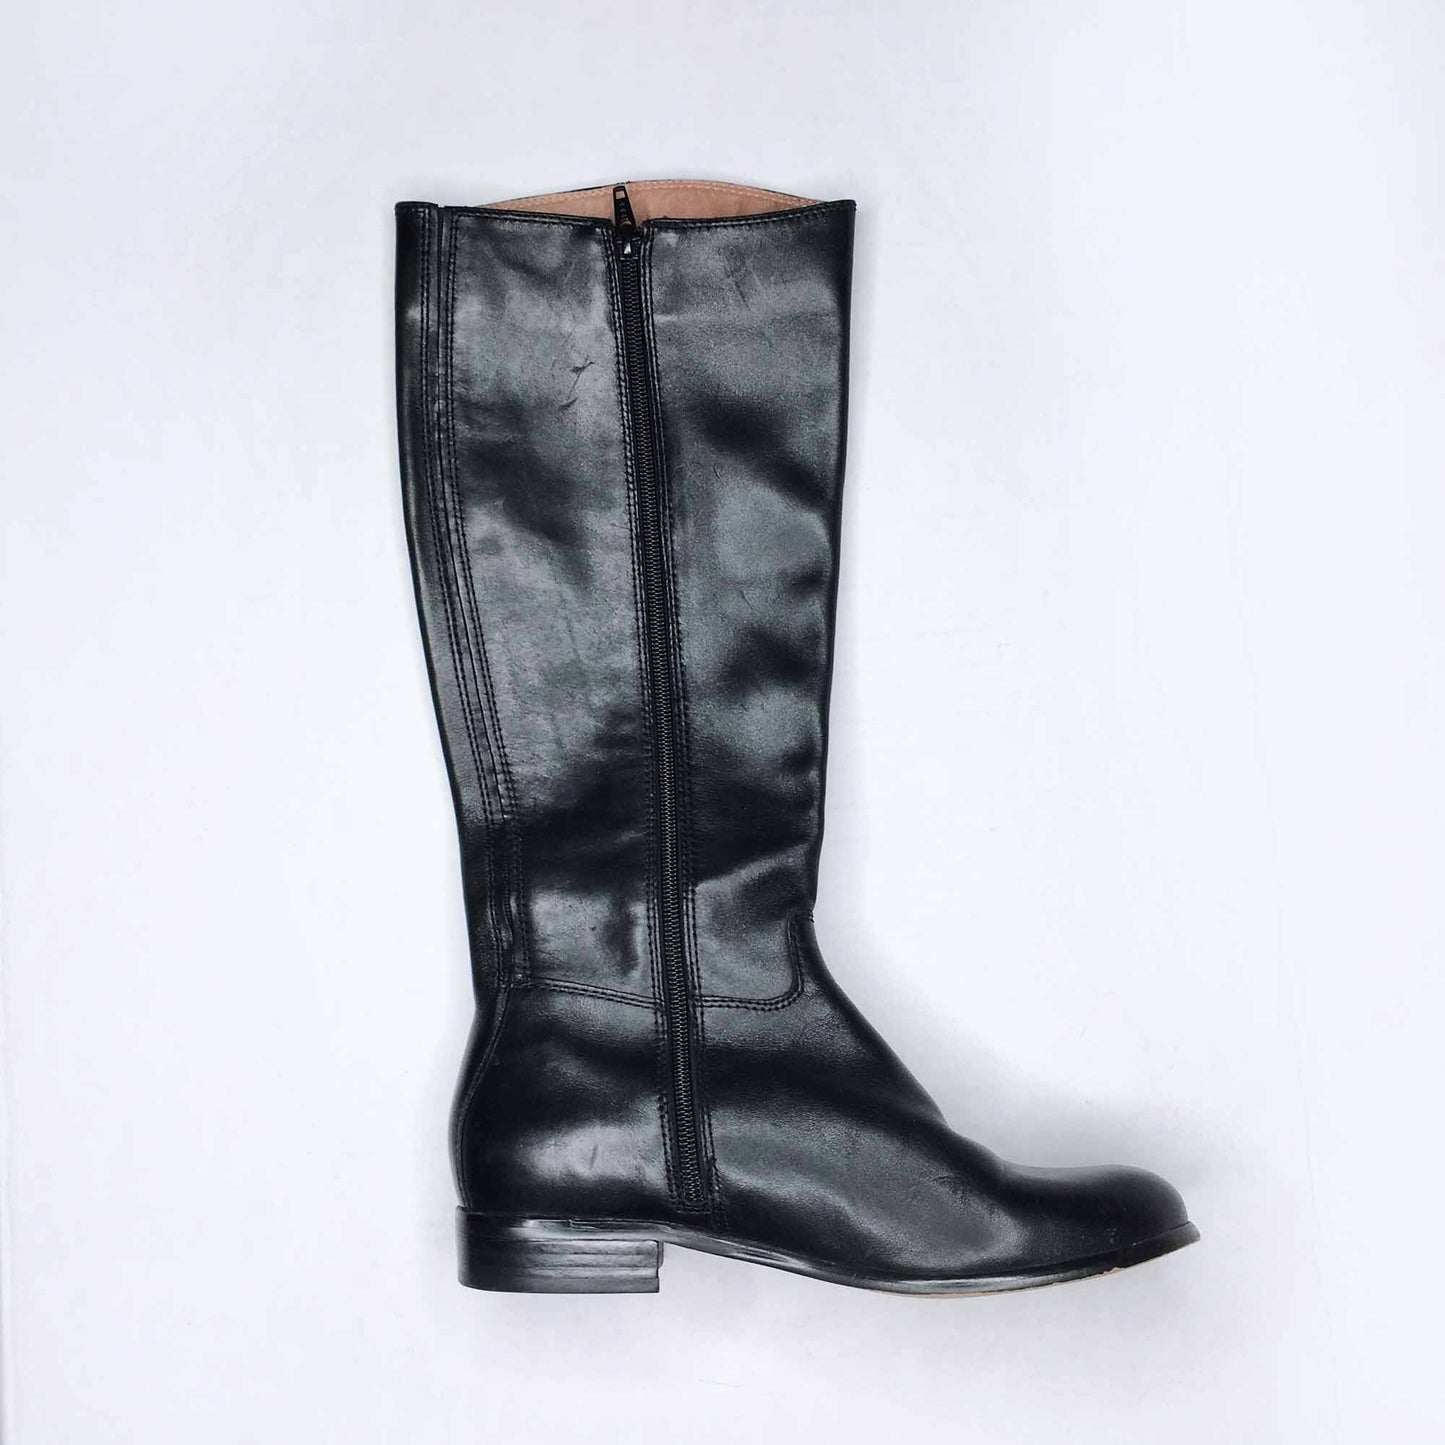 Corso Como tall leather riding boot - size 7